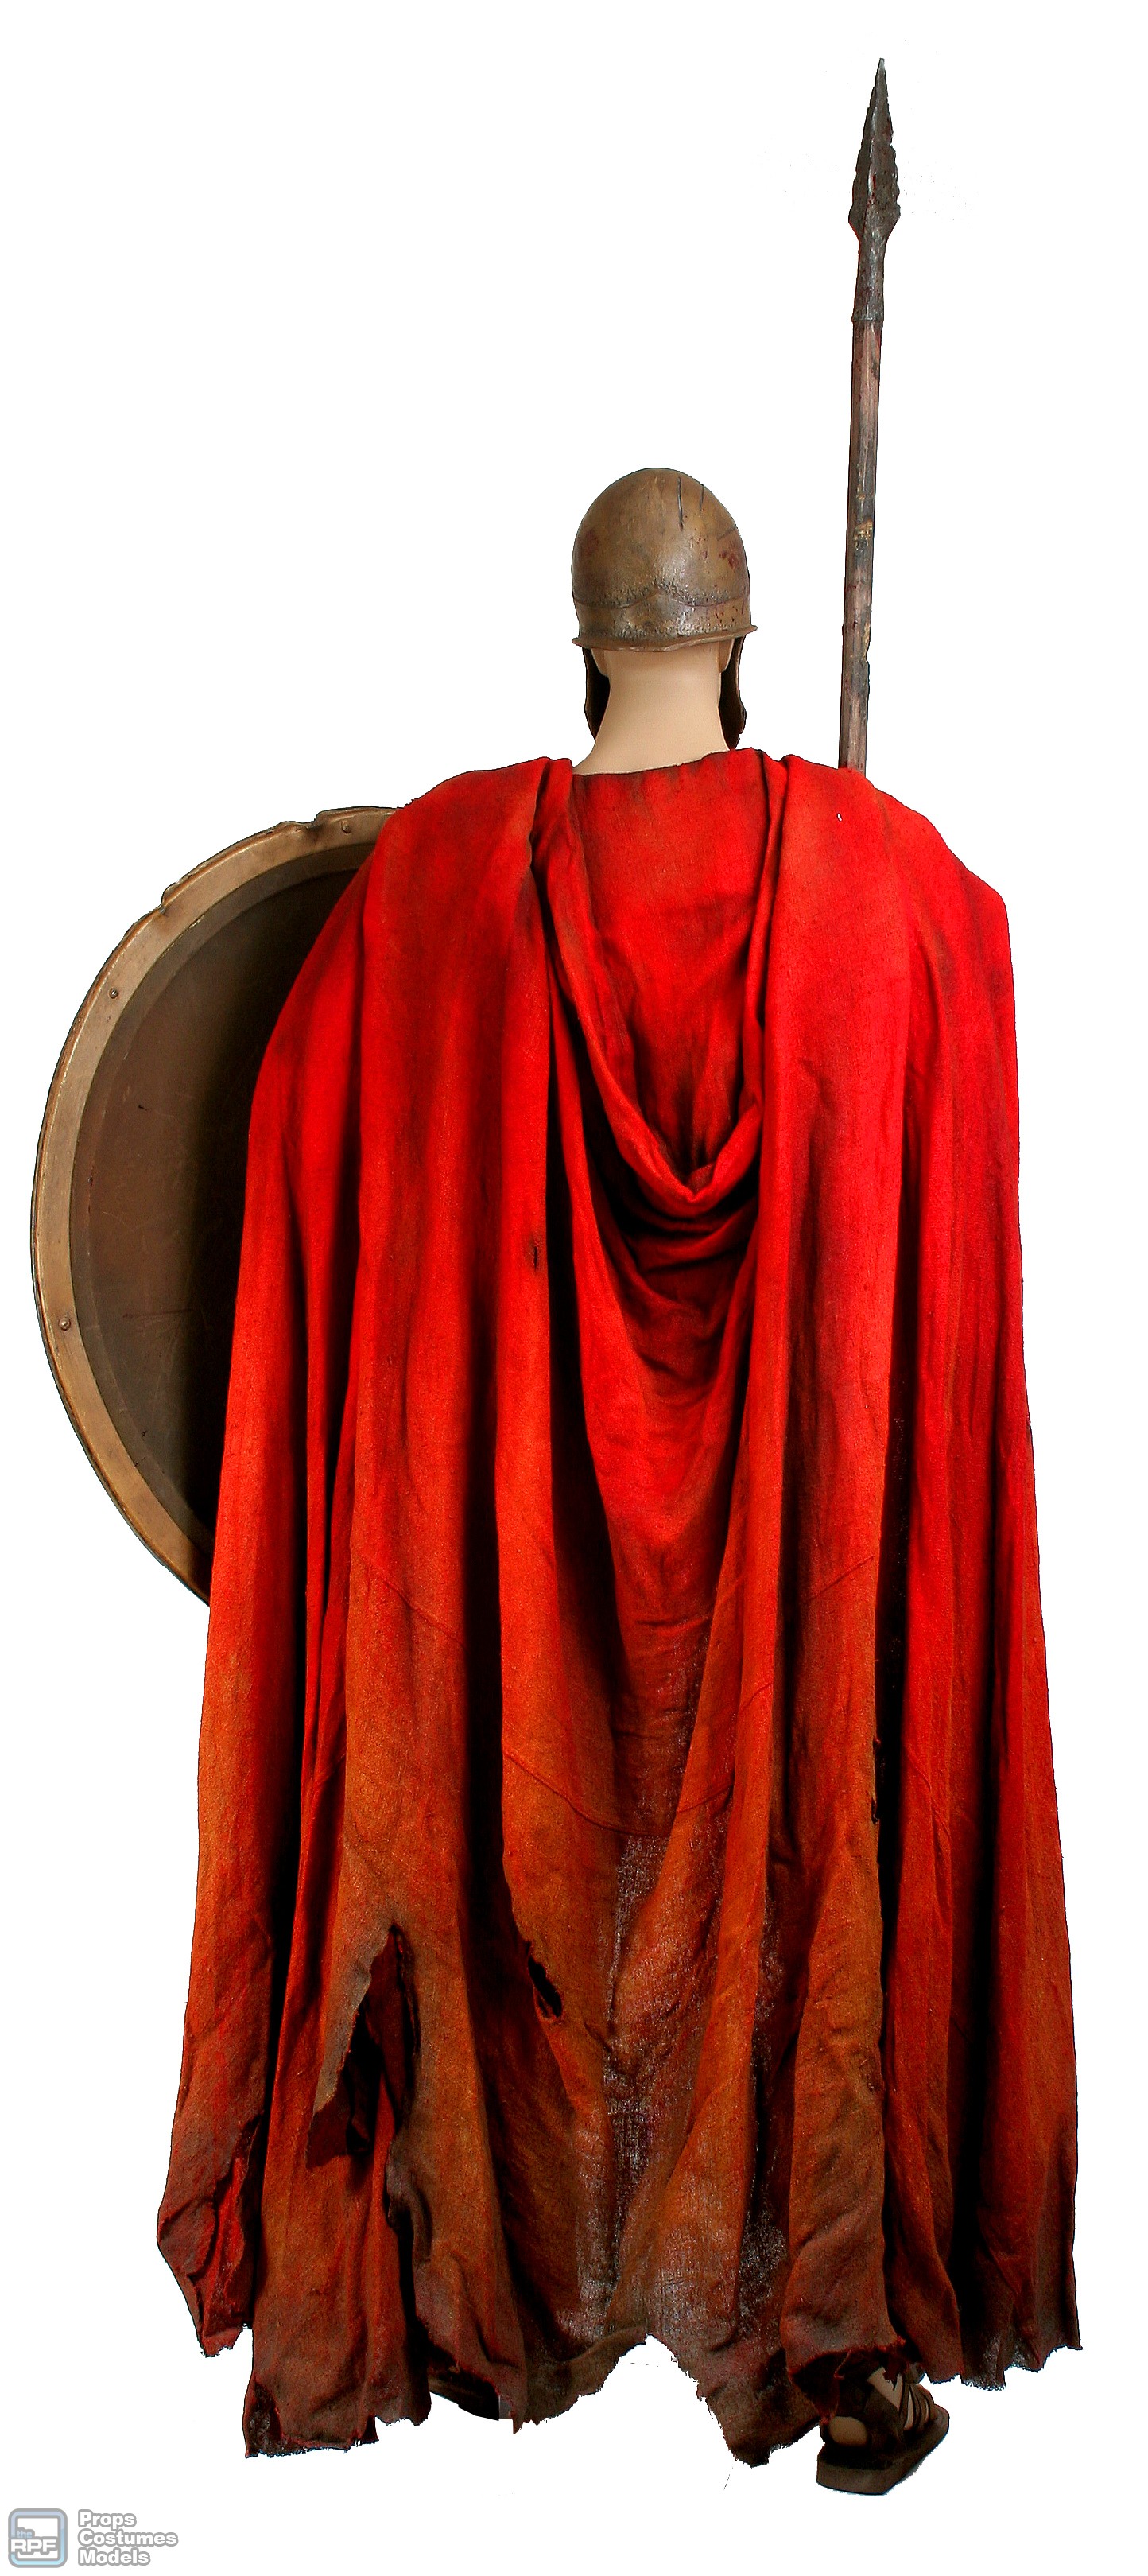 300 - Spartan Costume. 